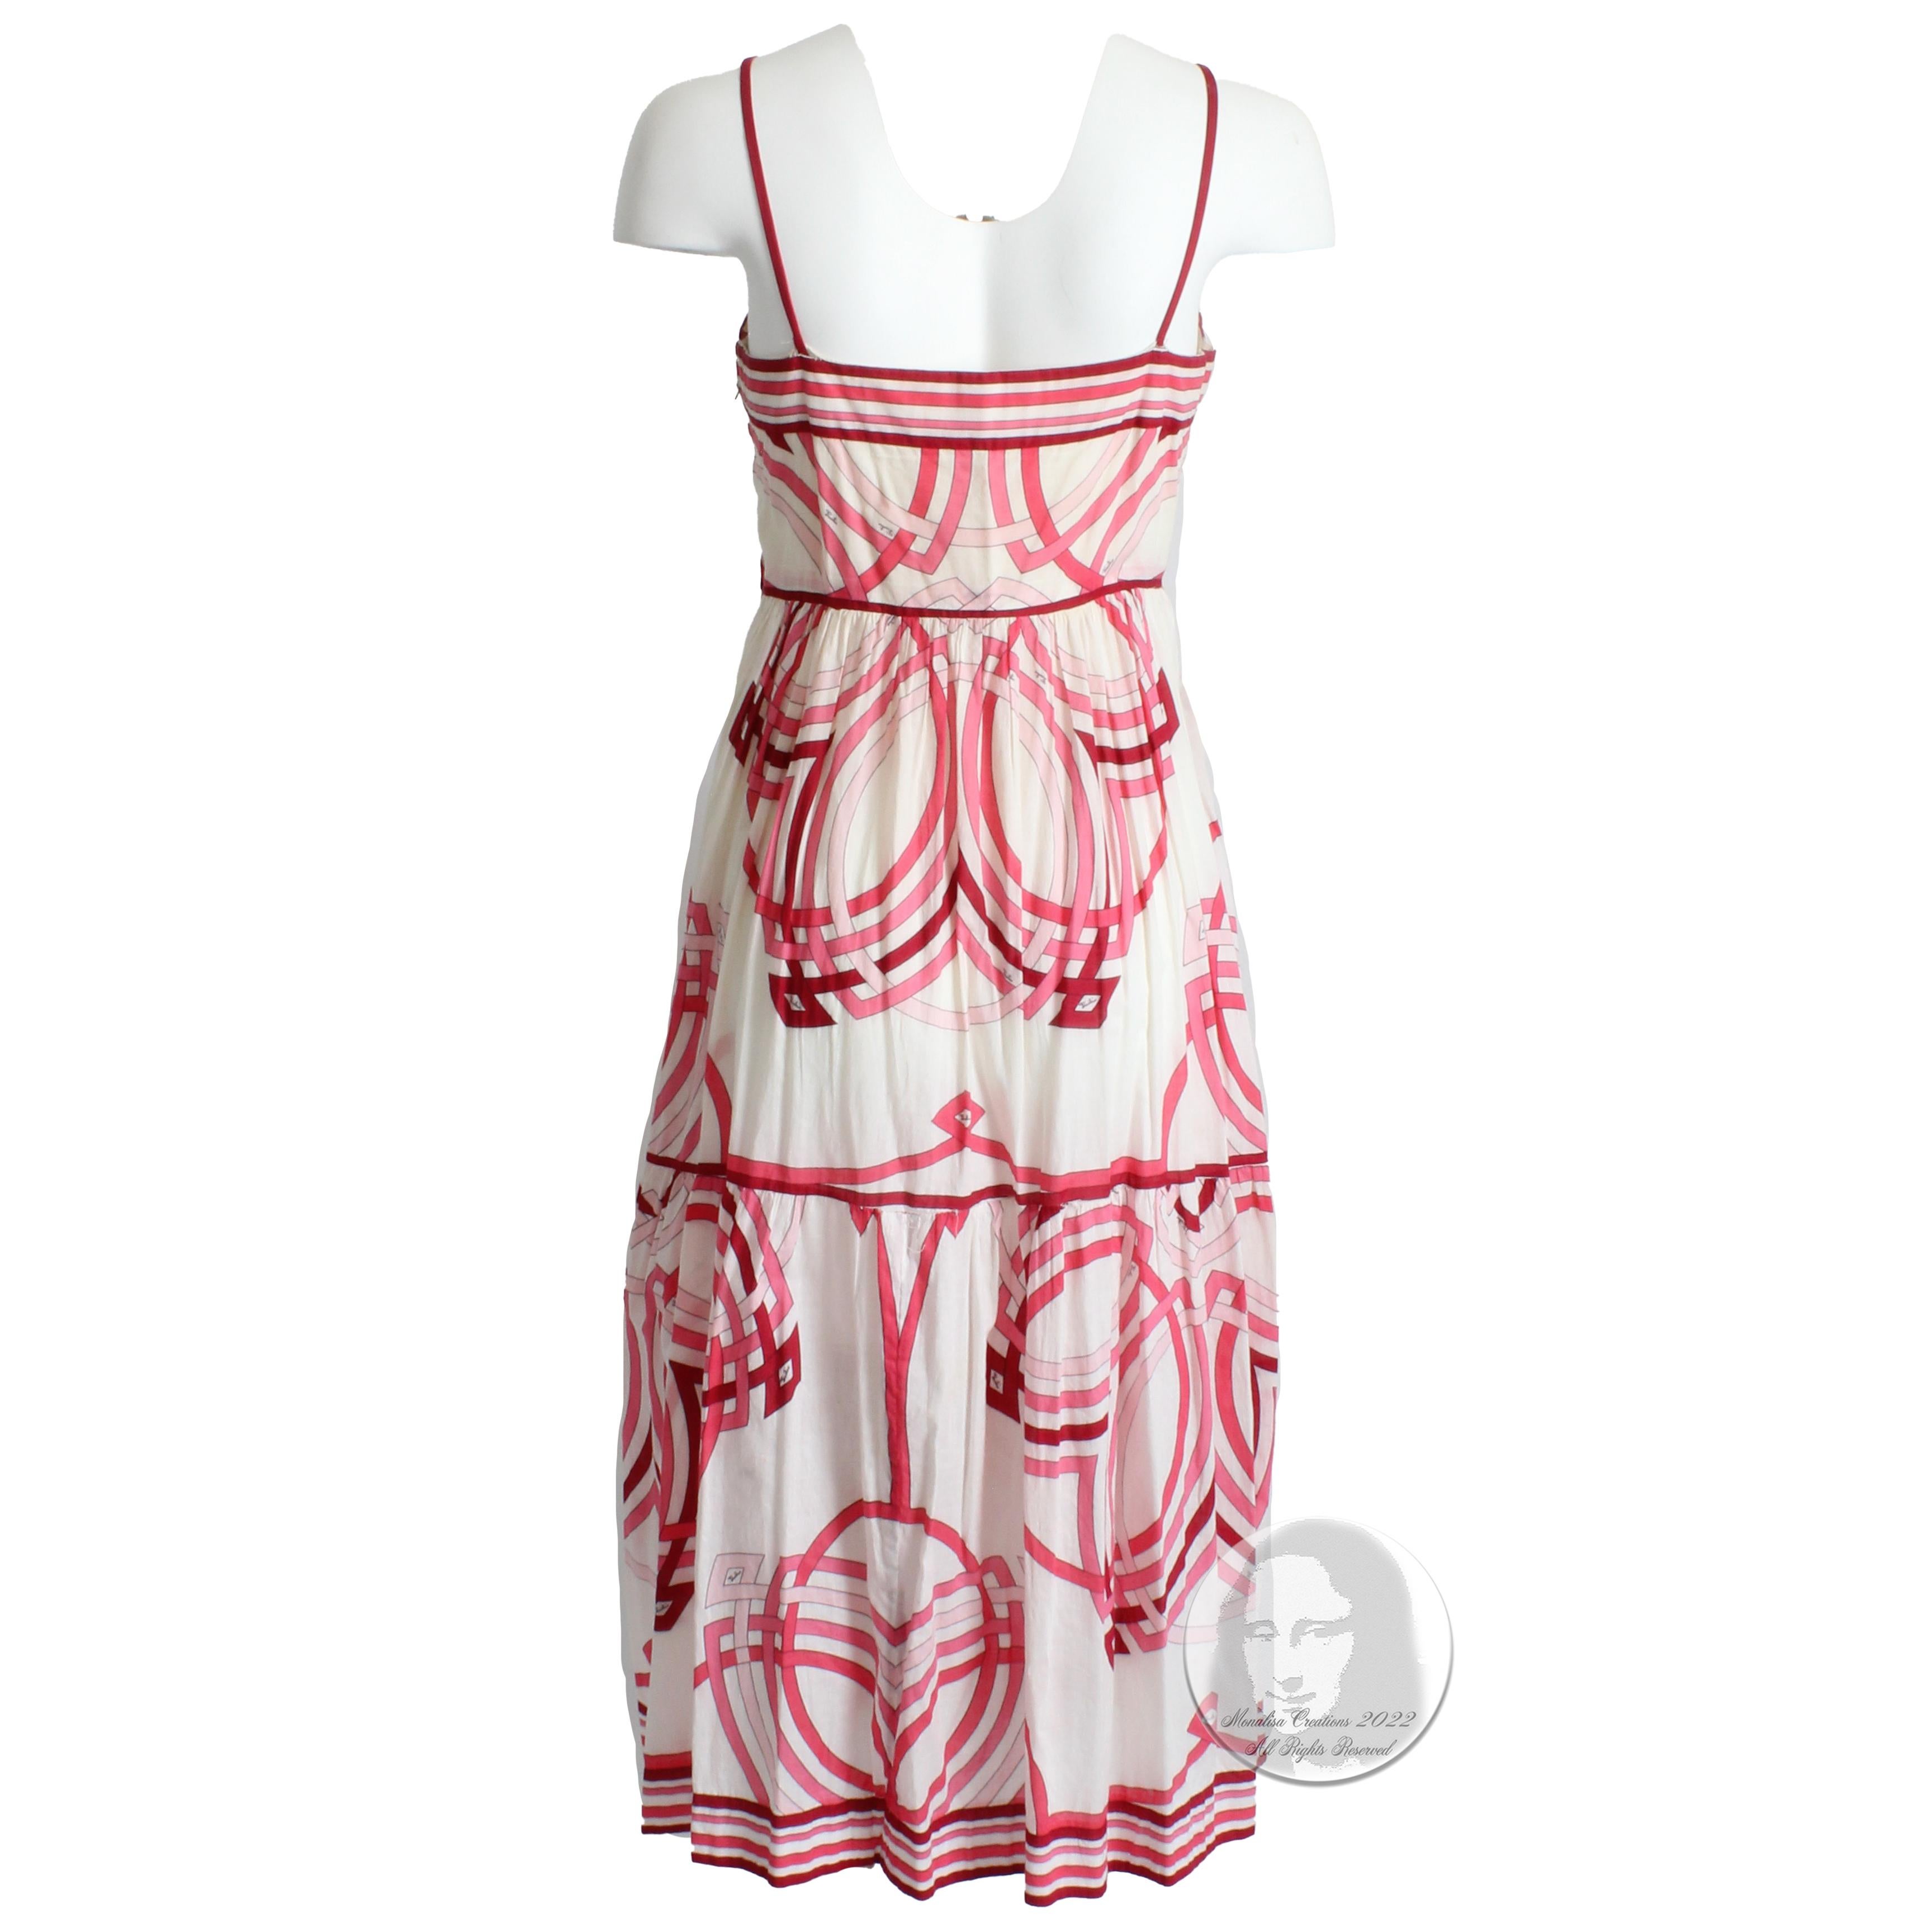 Emilio Pucci Dress Sundress Pink Abstract Print Cotton Spaghetti Strap 70s  3